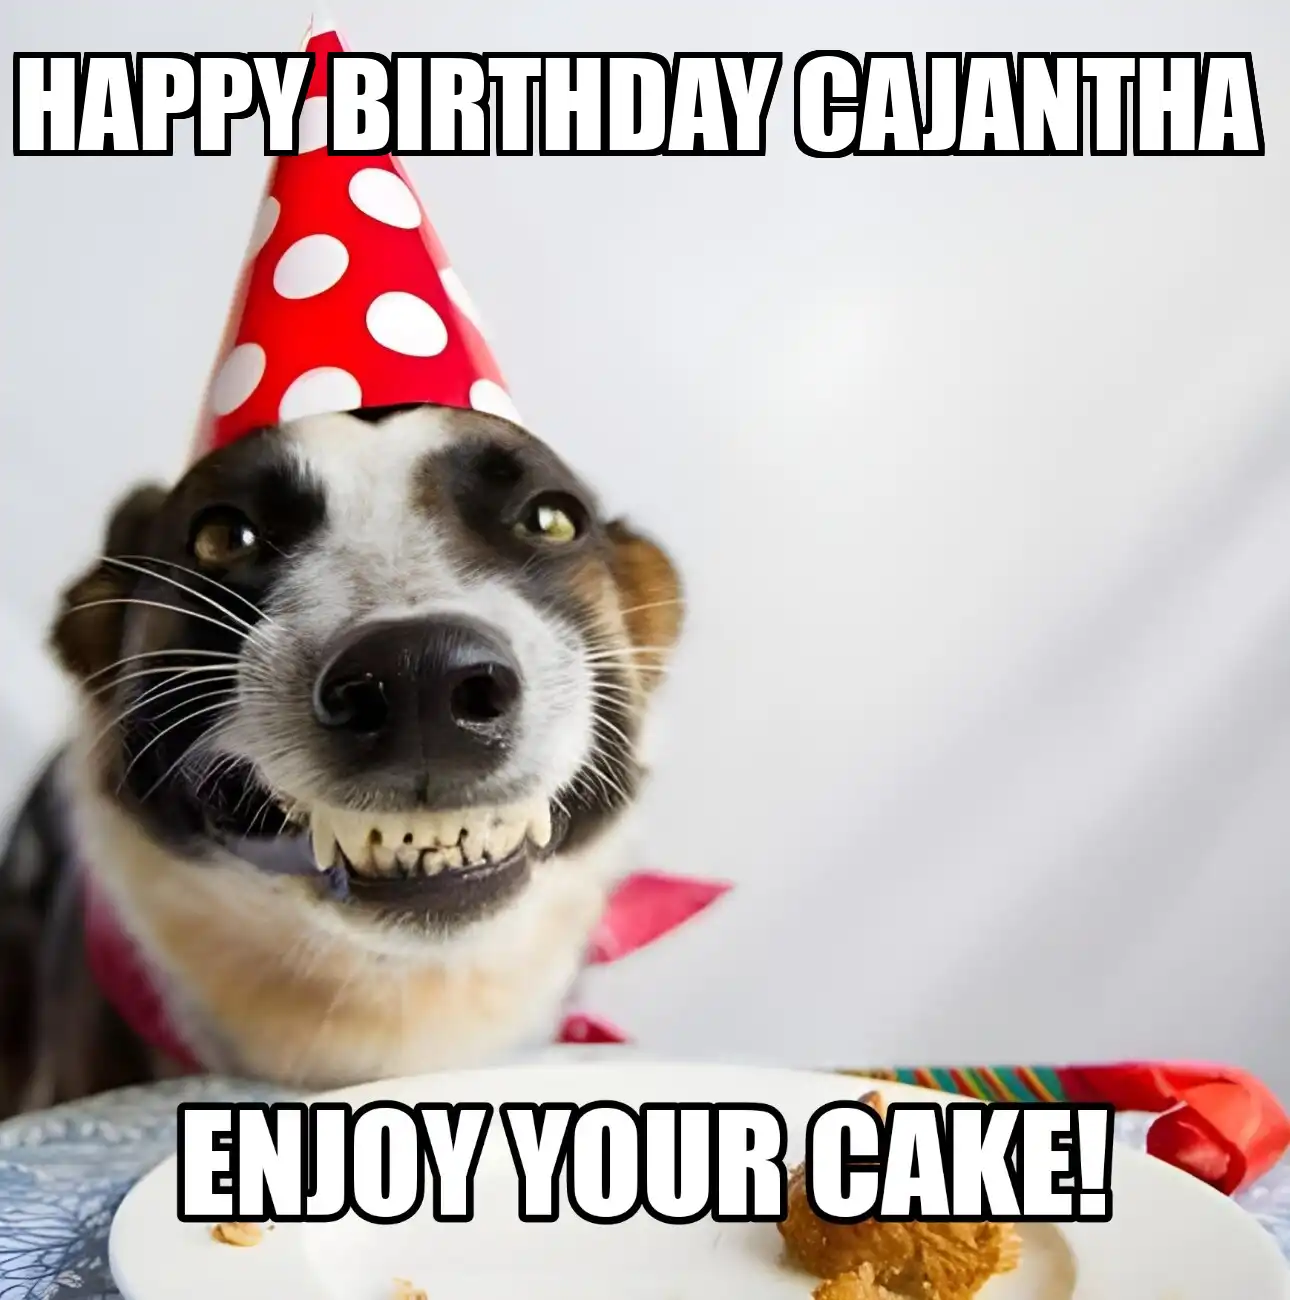 Happy Birthday Cajantha Enjoy Your Cake Dog Meme